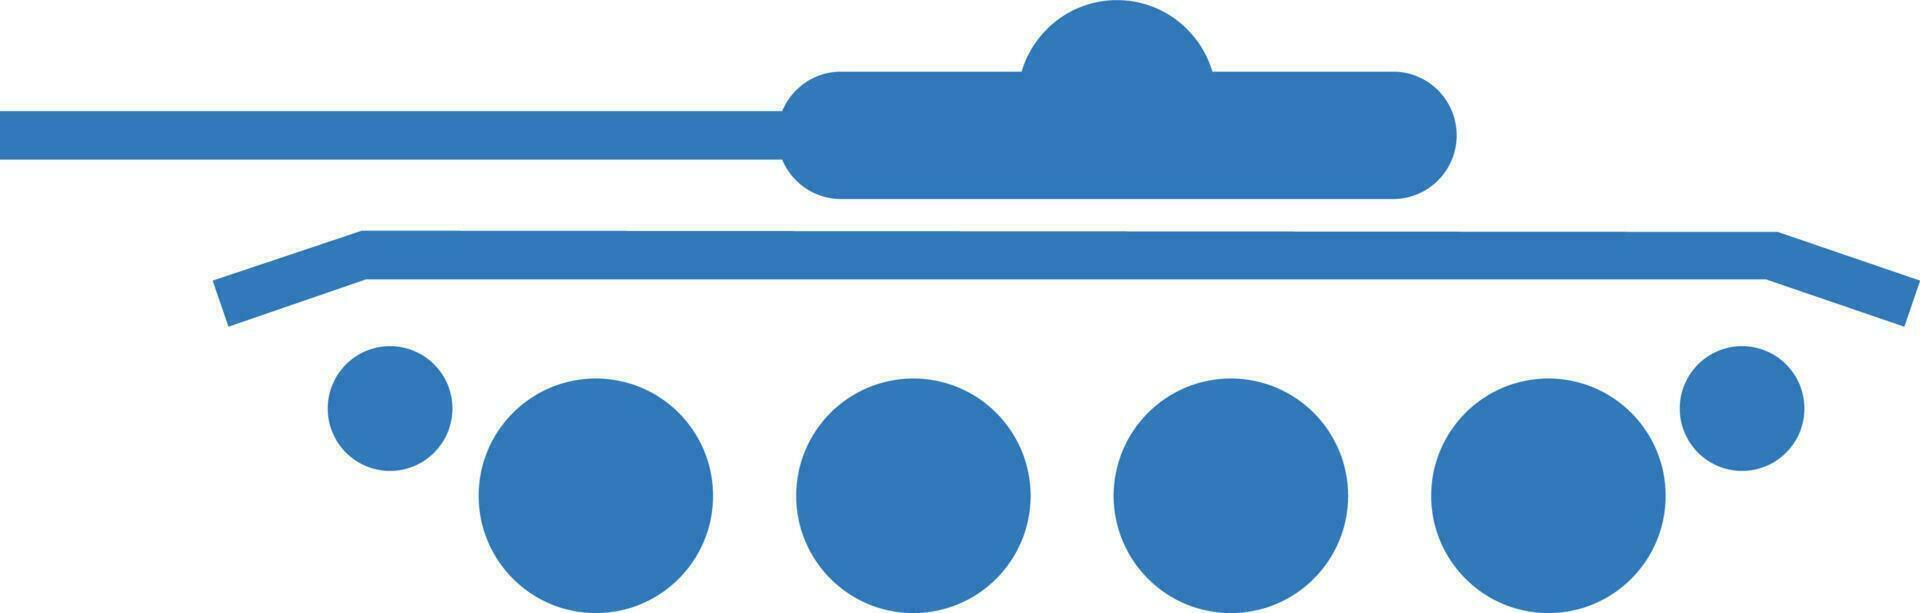 Blau Artillerie Gewehr Symbol Vektor. vektor